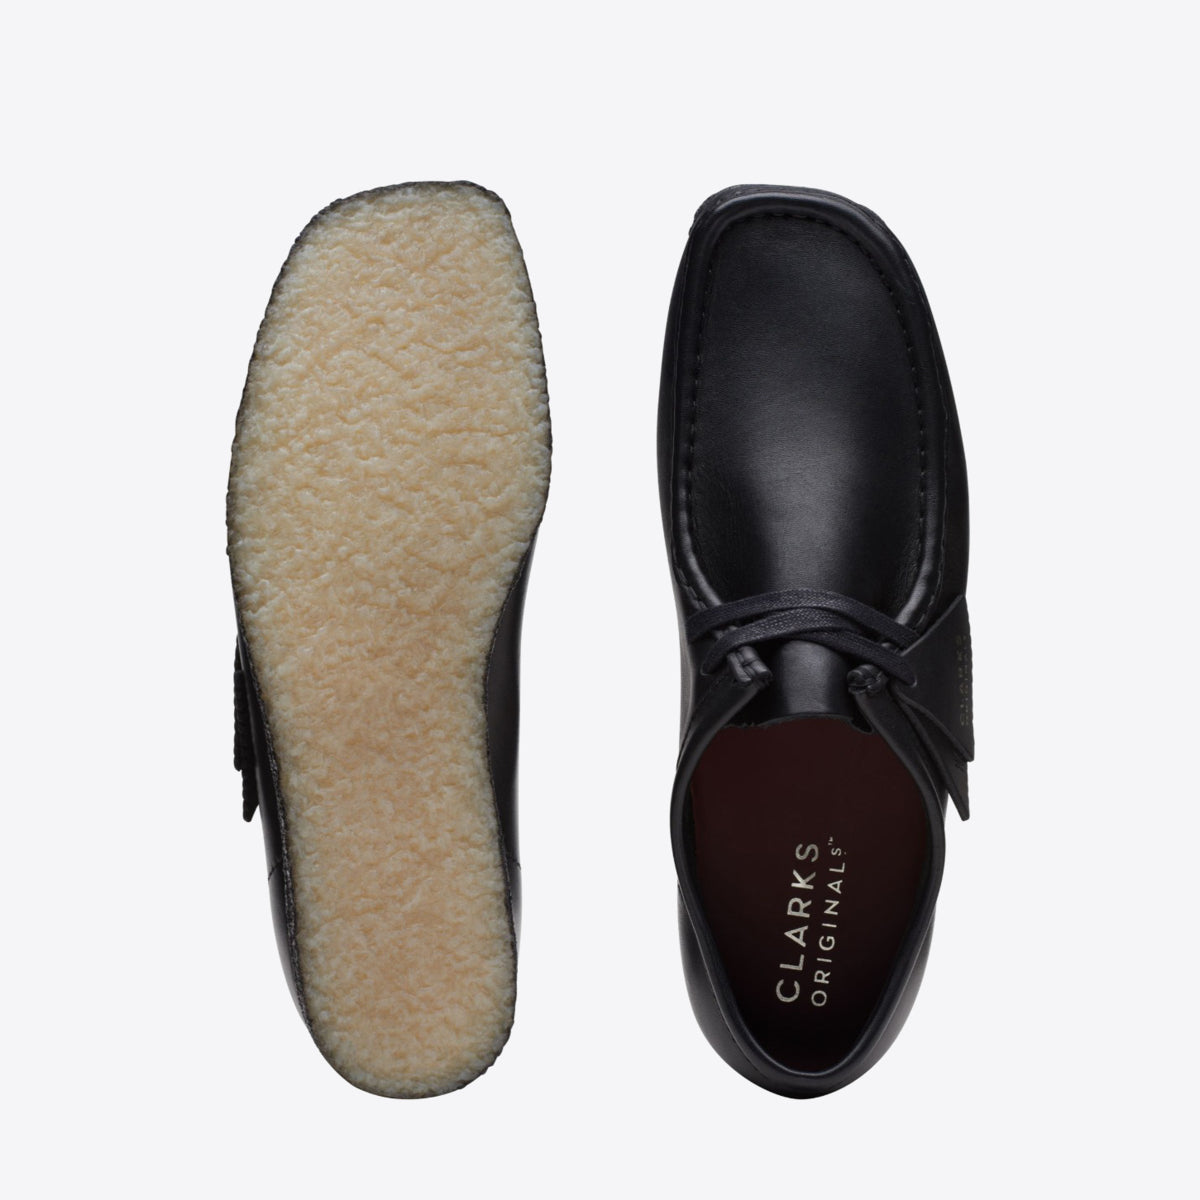 CLARKS Wallabee Shoe Leather Black - Image 7